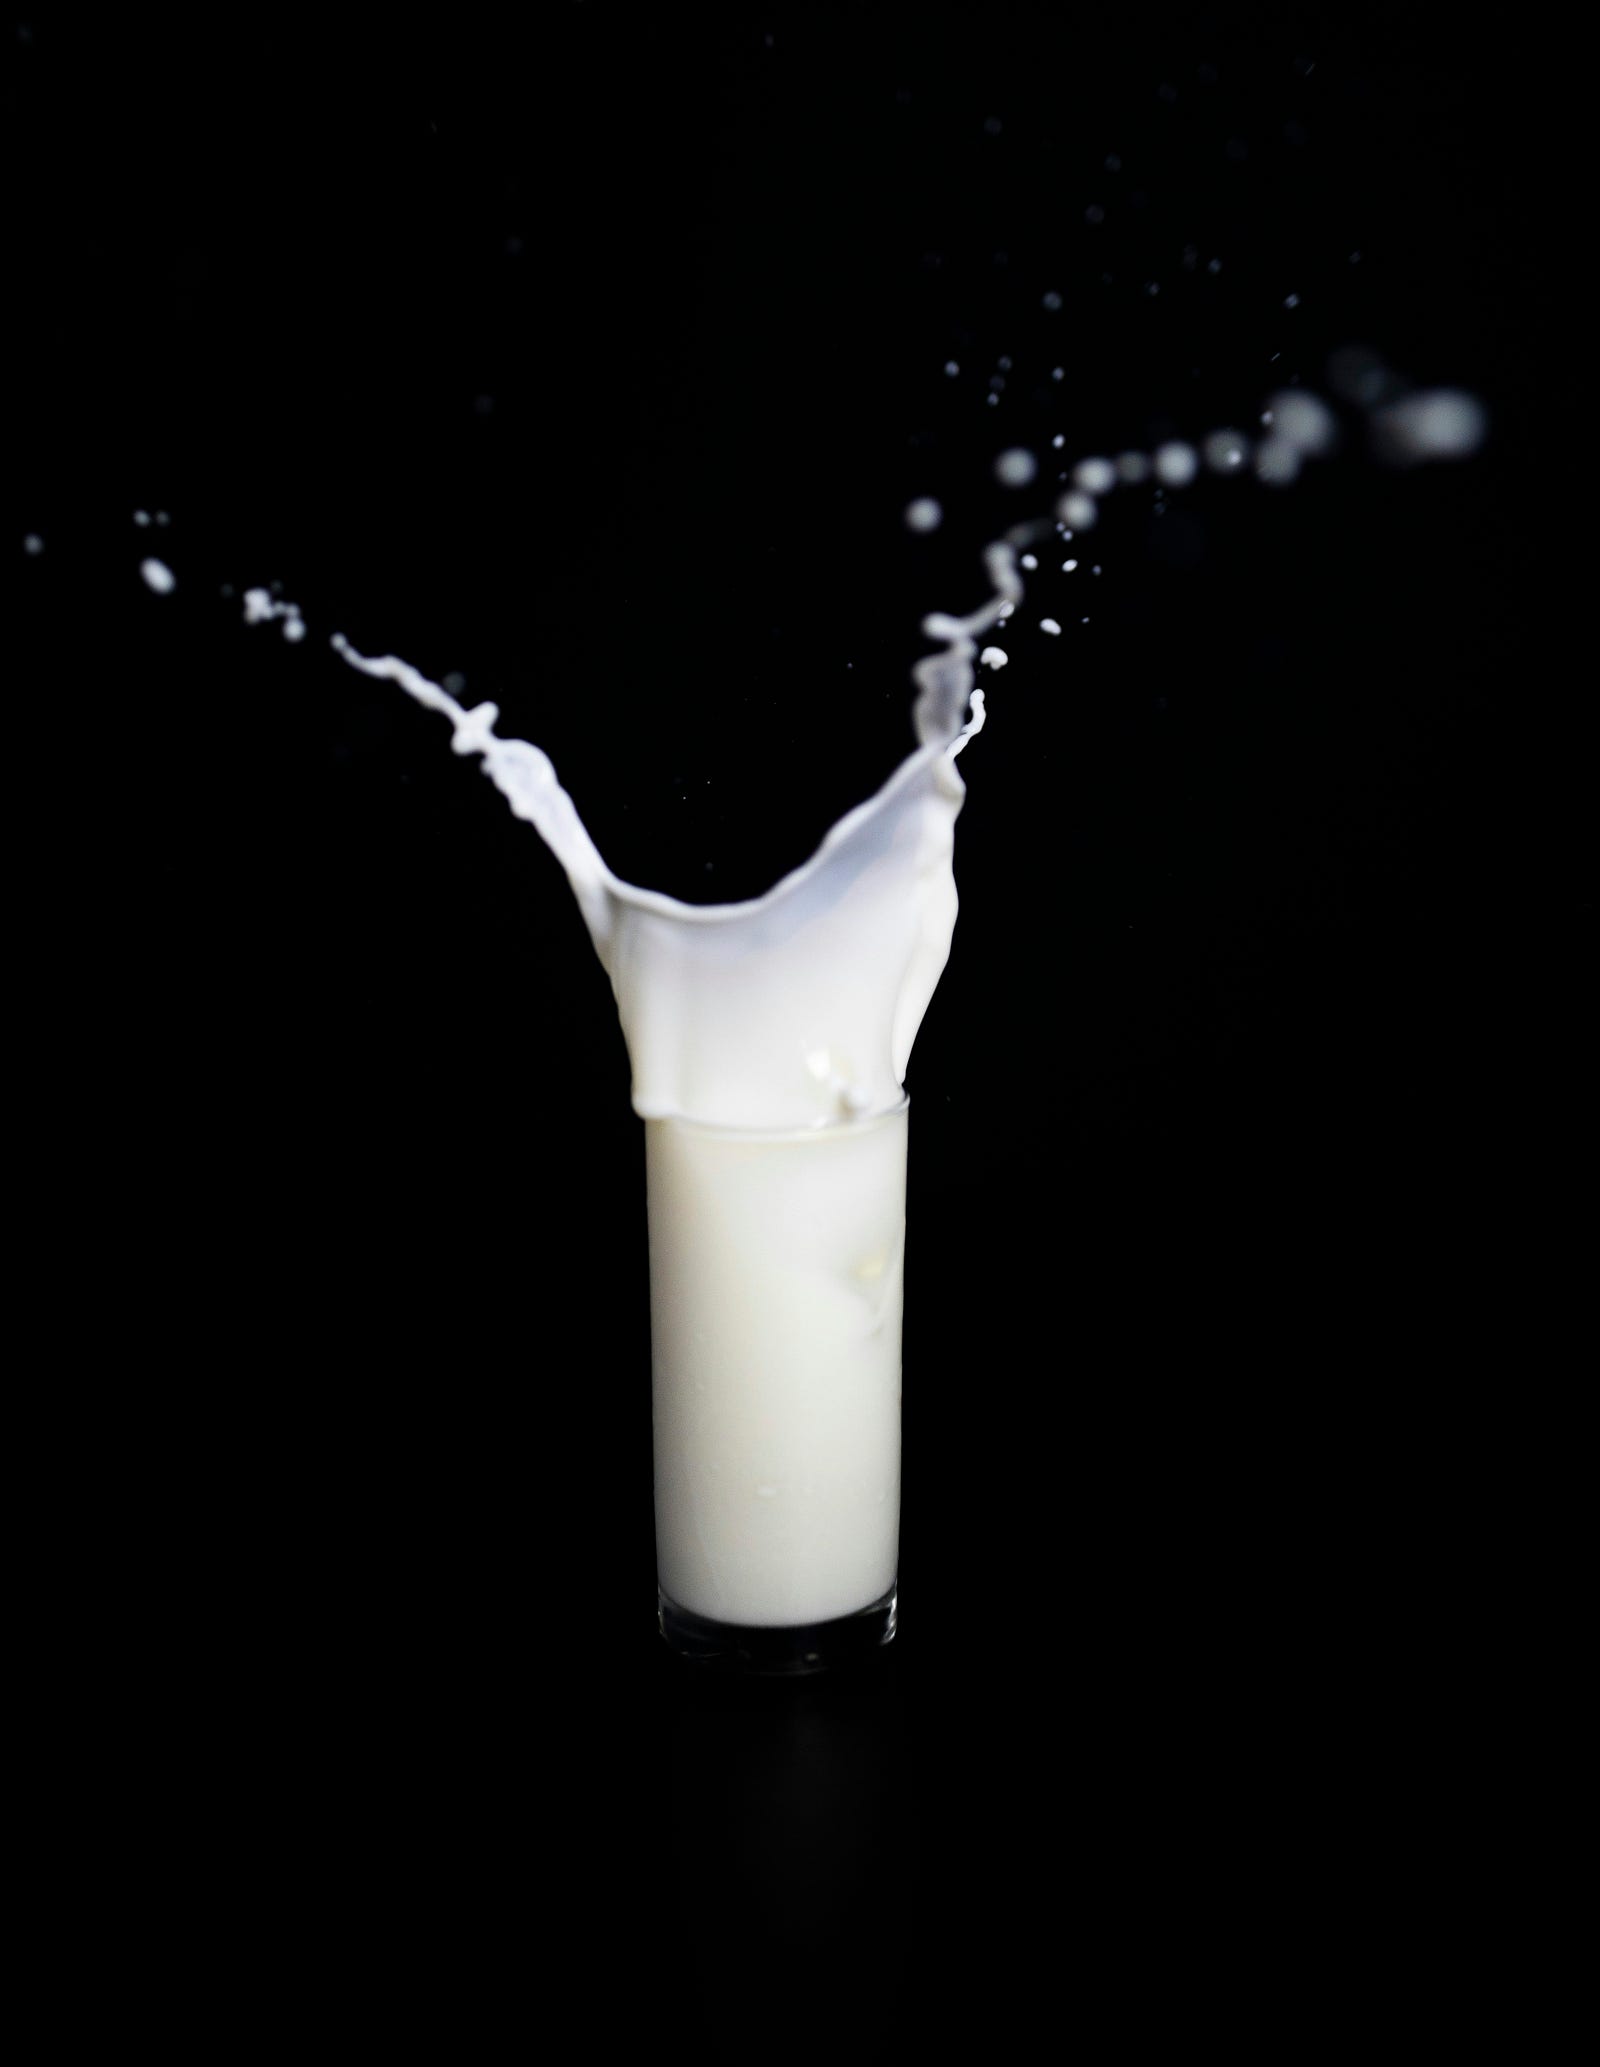 Milk in a tall clear glass spills upwards.